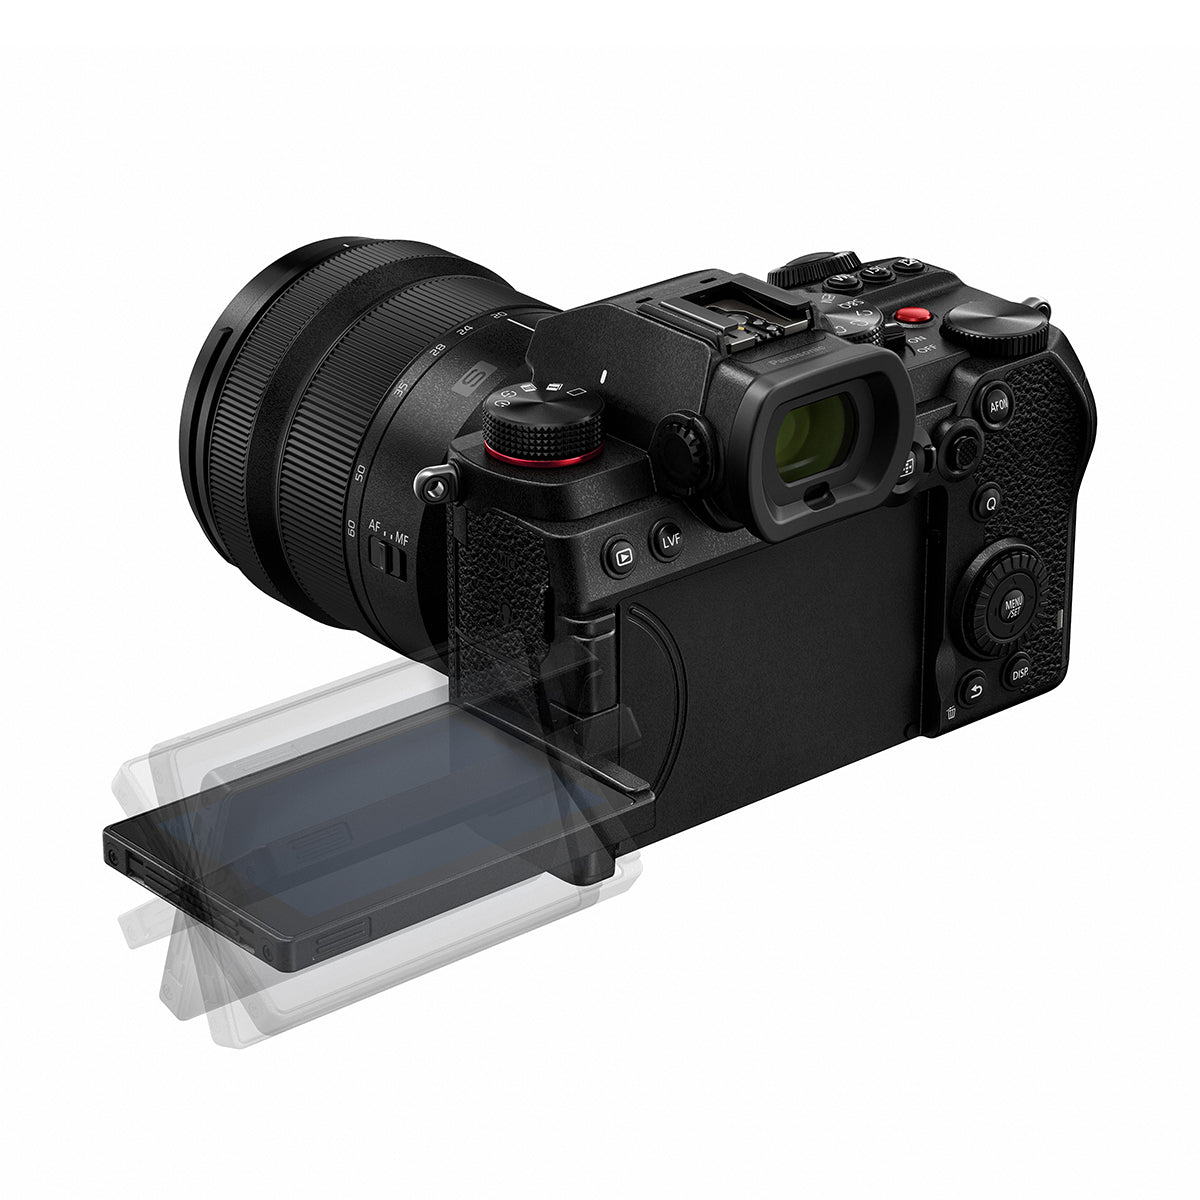 Panasonic Lumix S5 Full Frame Mirrorless Camera with Lumix S 20-60mm f/3.5-5.6 Lens